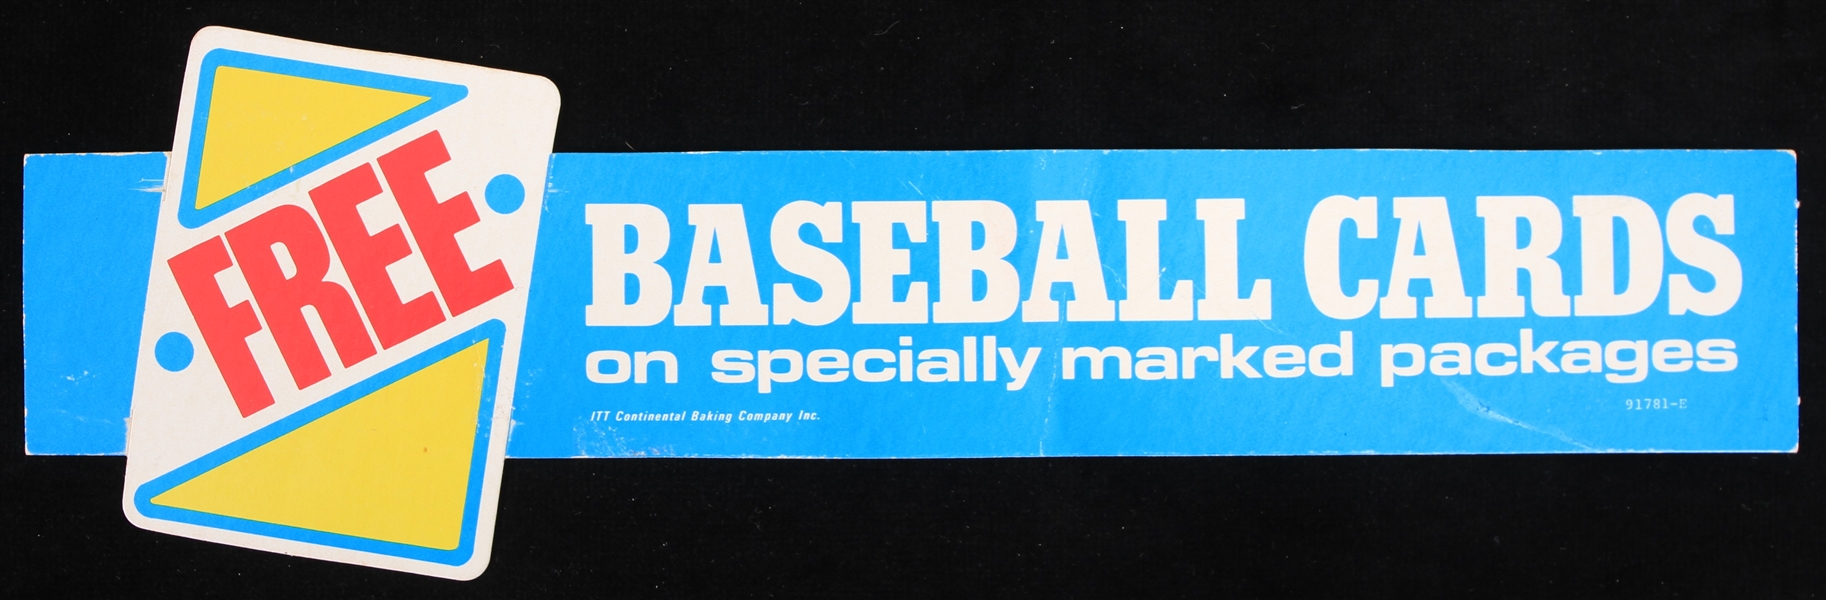 1990 Wonder Bread Baseball Card Shelf Promotion 4" x 13.5" Display 